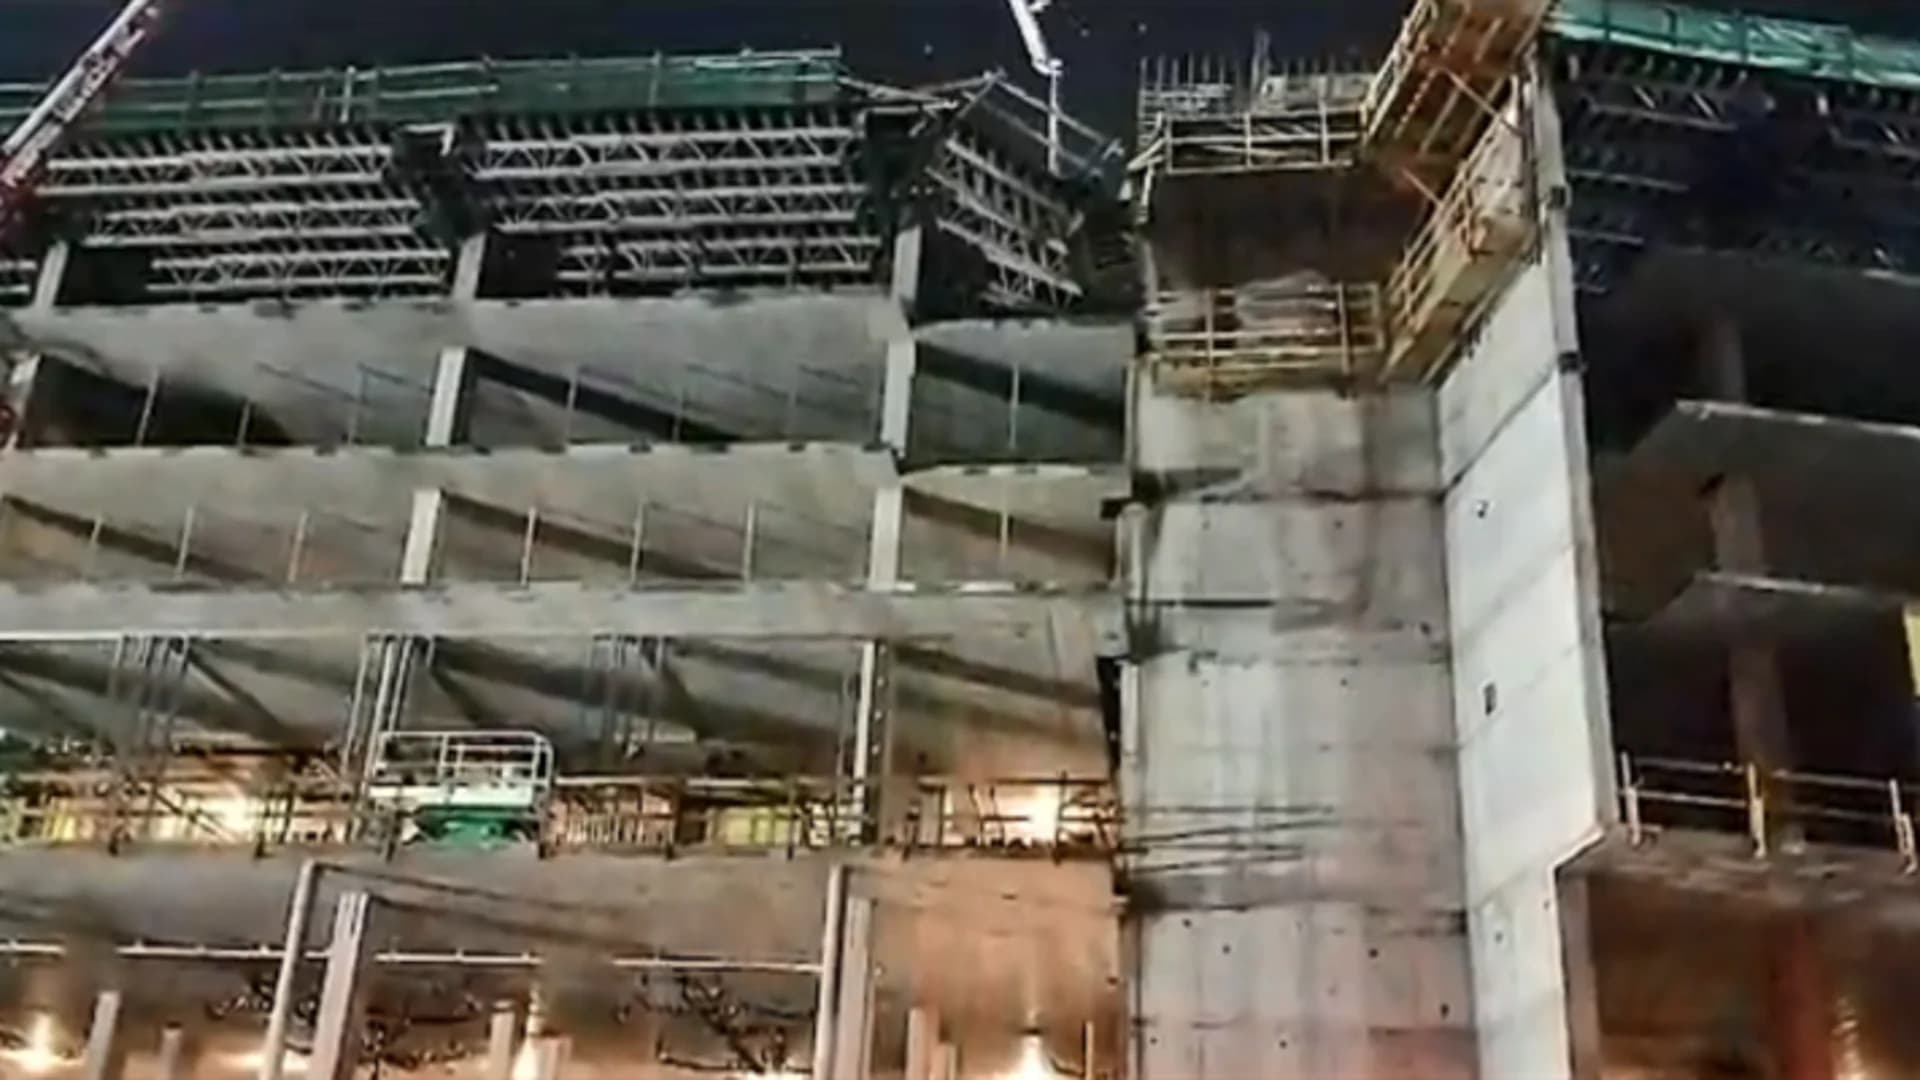 Fire Dept: 2 workers die in scaffolding collapse near Disney